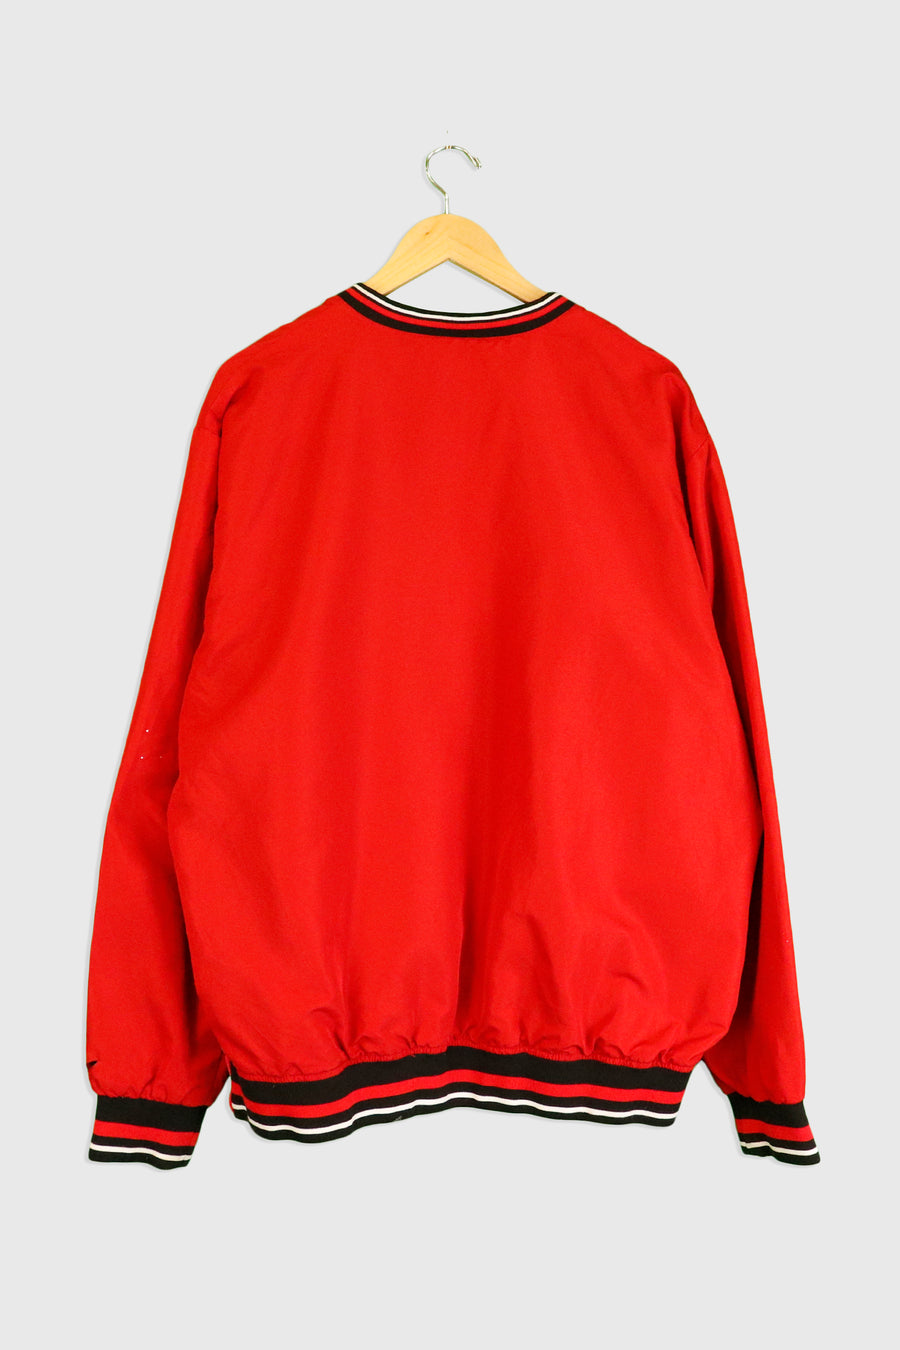 Vintage Ohio State Varsity Patched Jersey Style Sweatshirt Sz XL